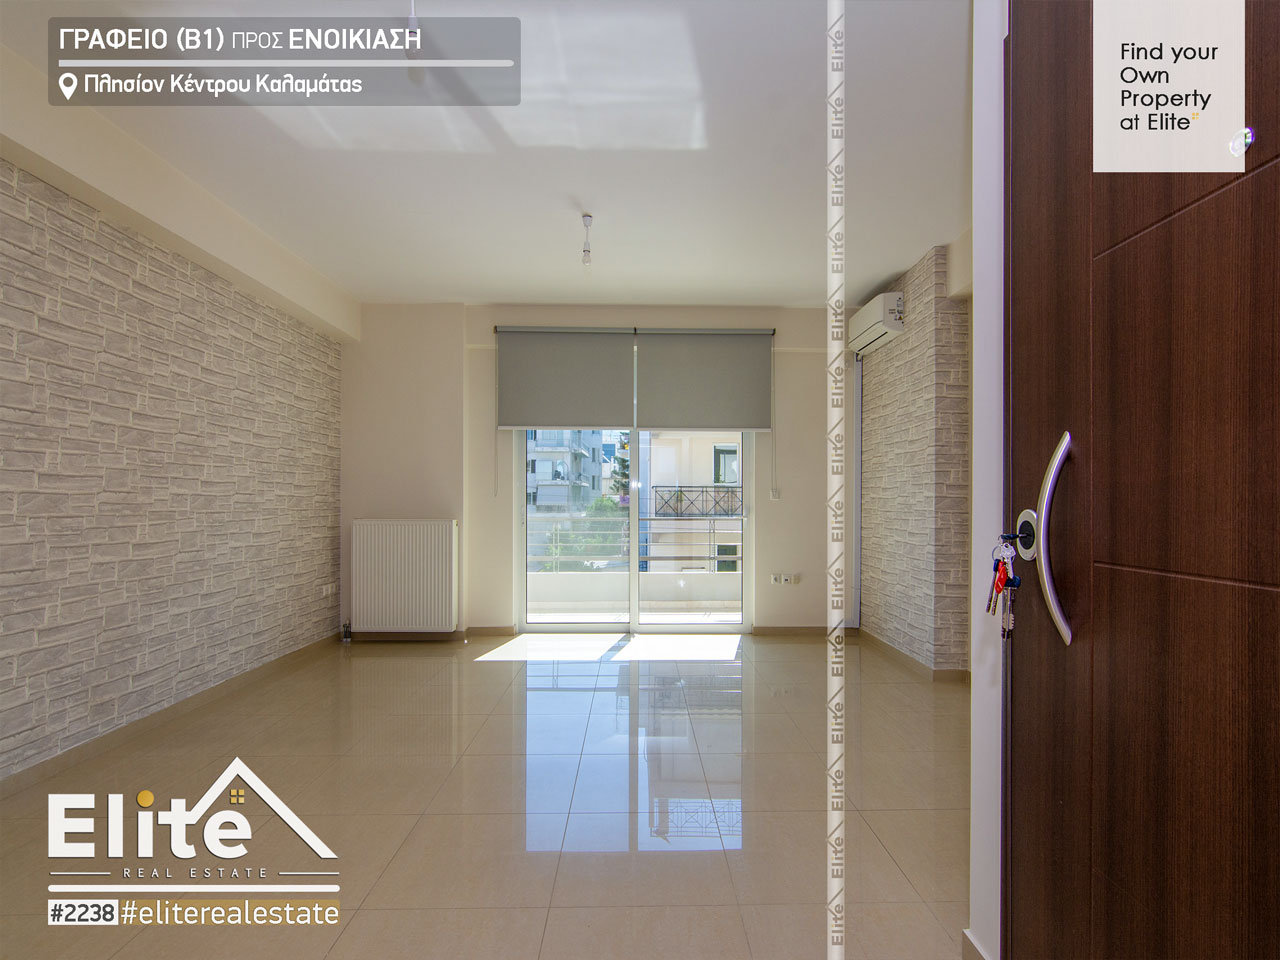 Rent commercial space Messini (Center) #2278 | ELITE